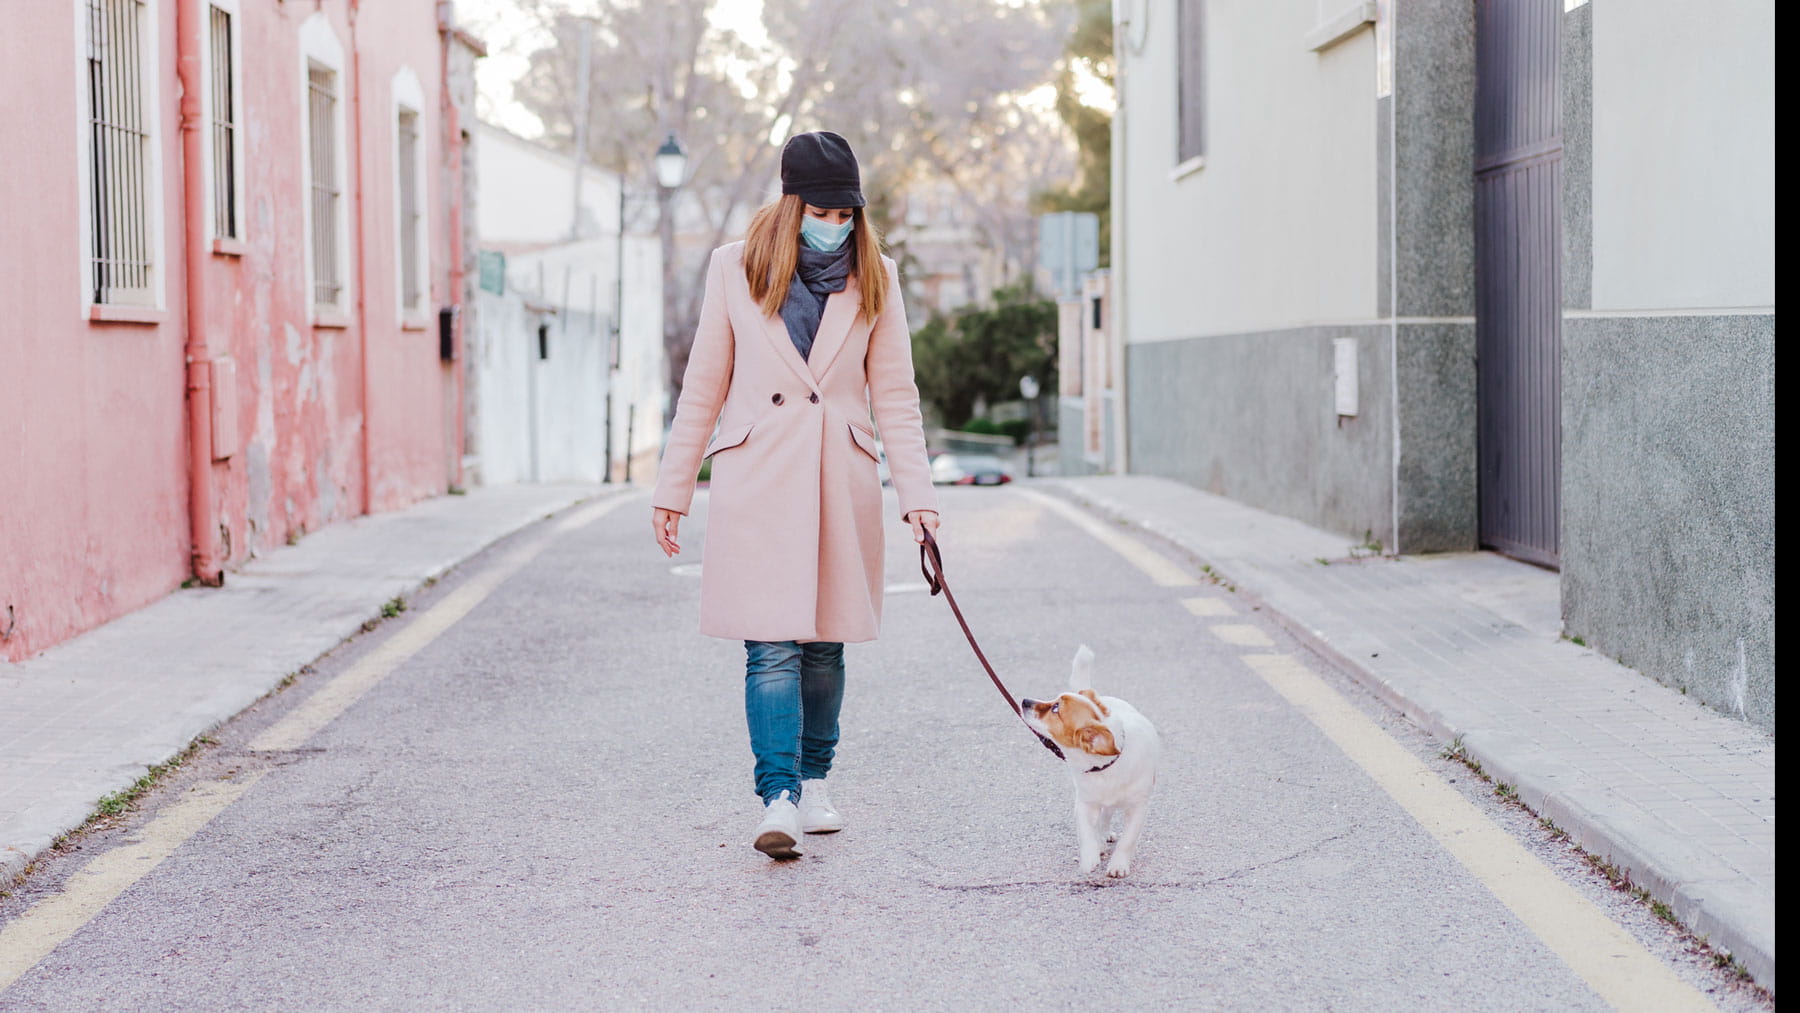 Woman wearing mask walks dog